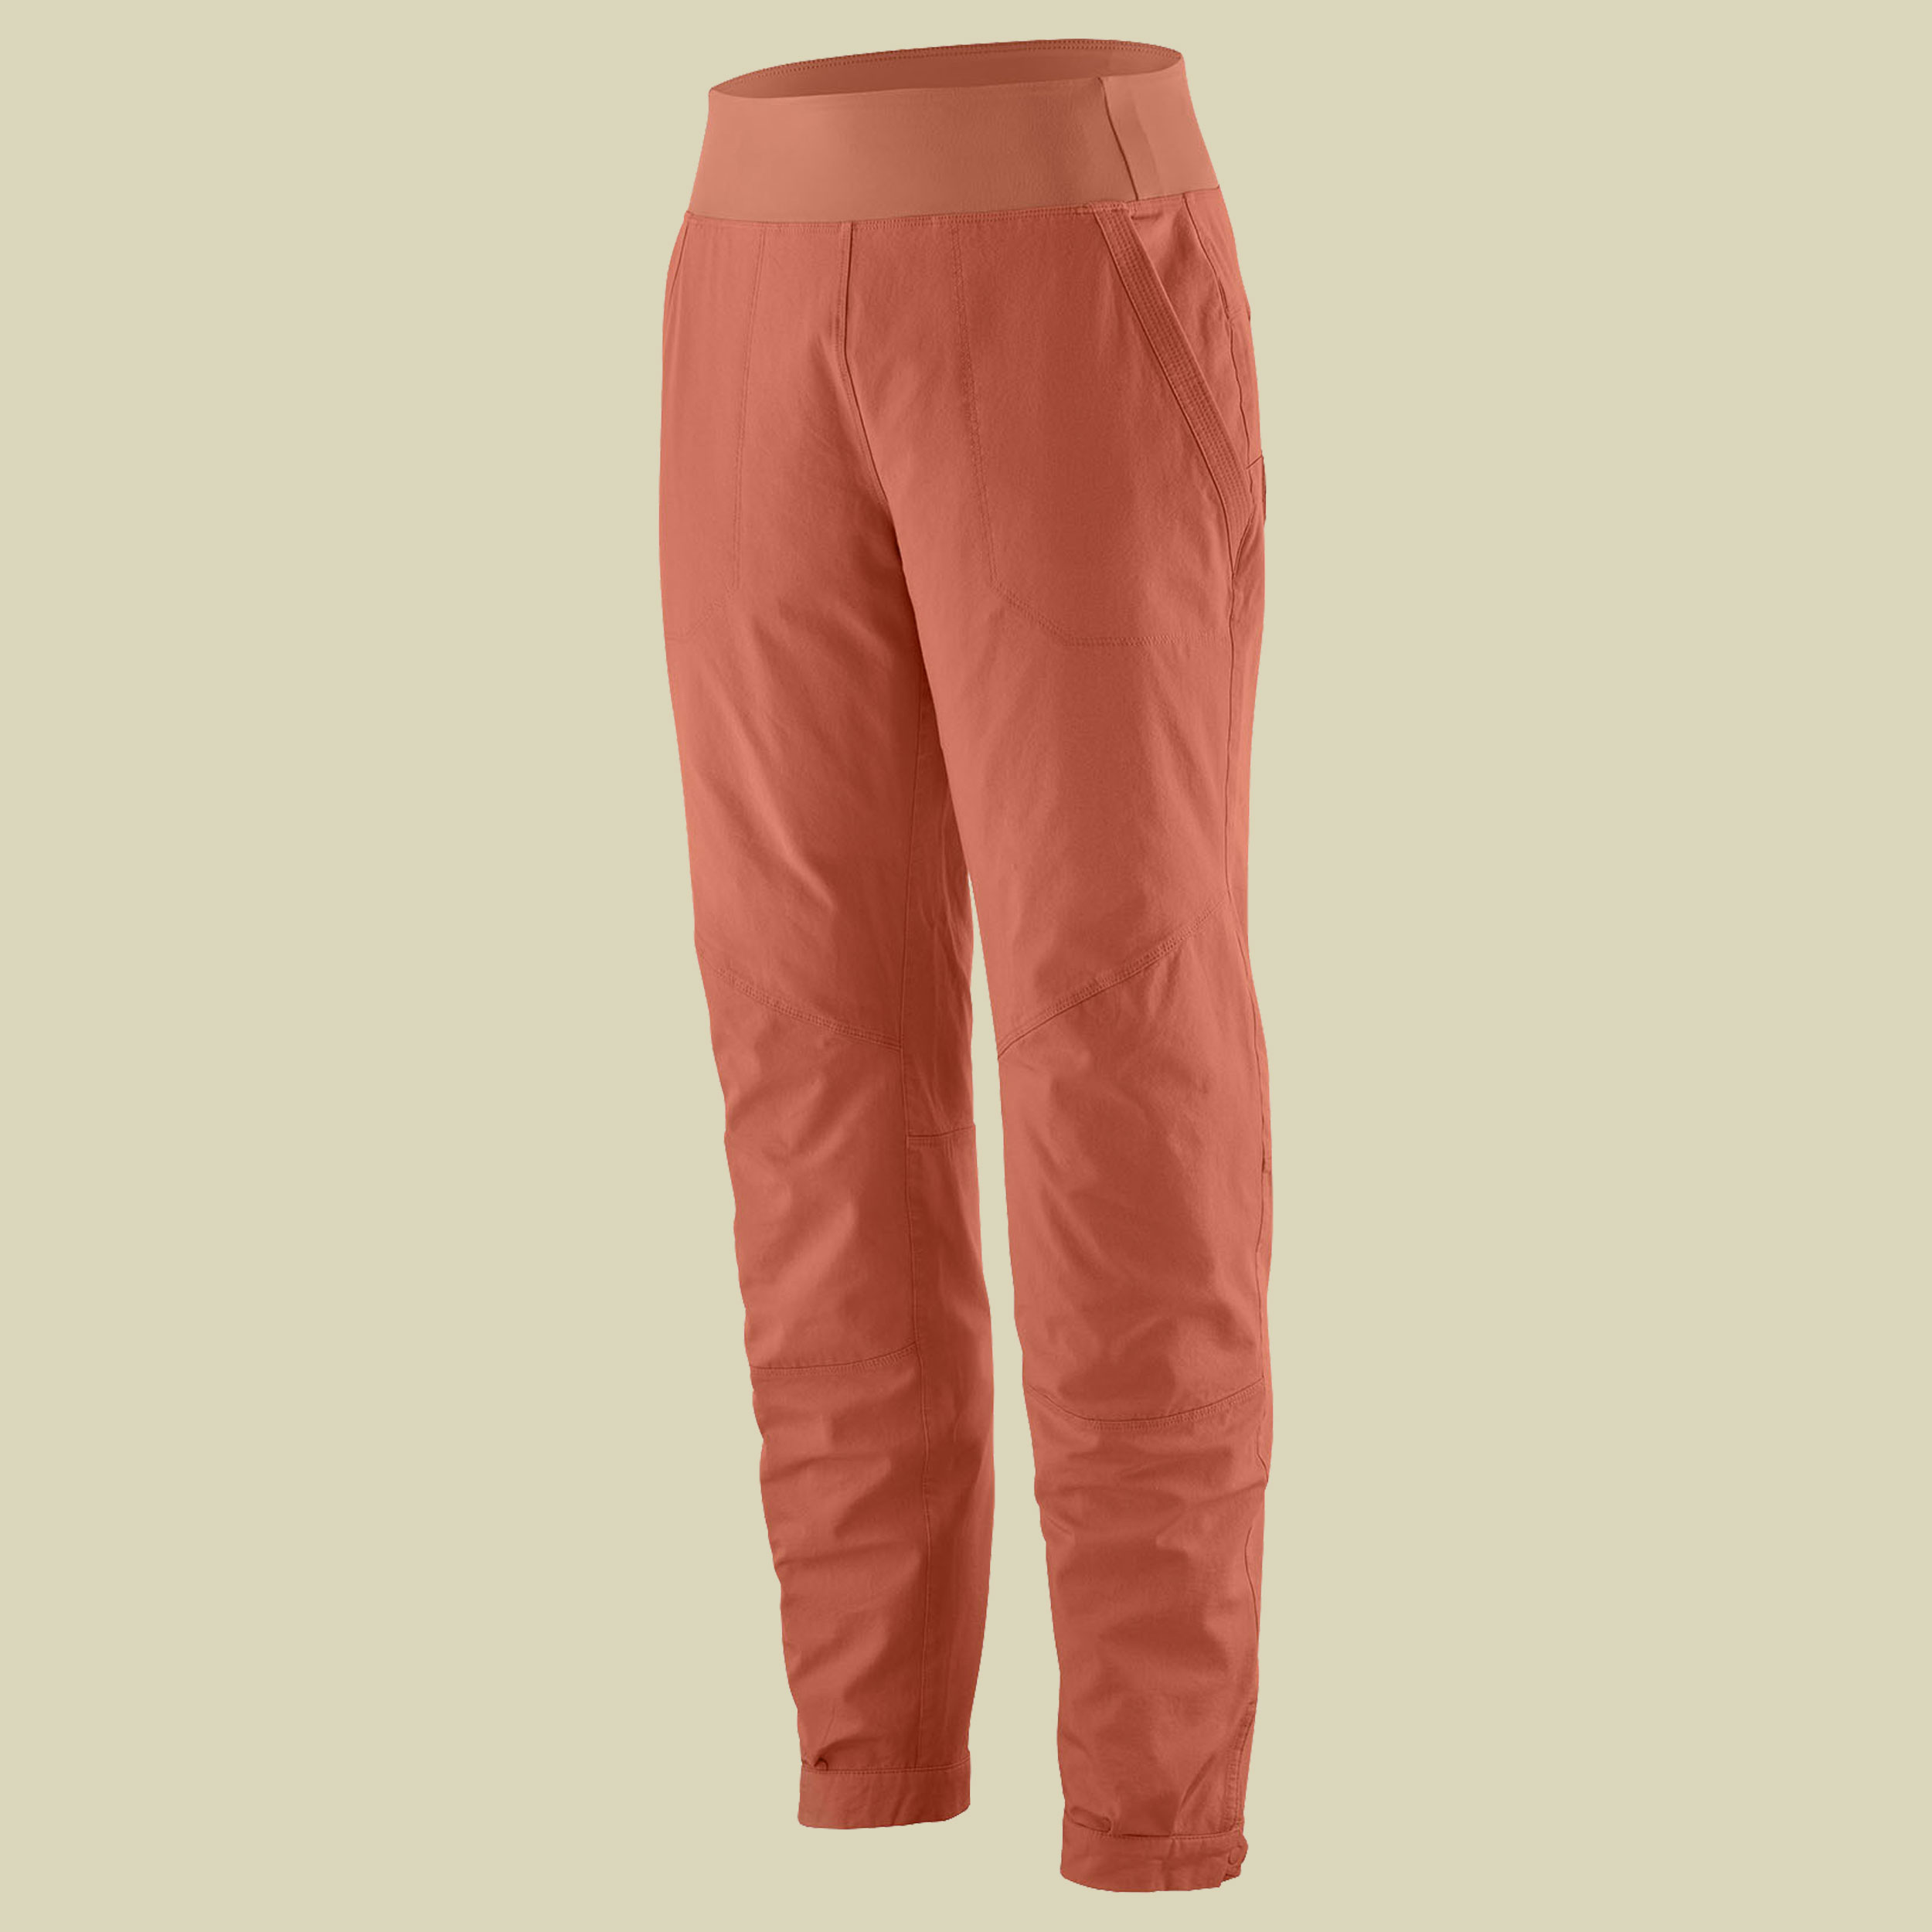 Caliza Rock Pants Women orange 6 - sienna clay